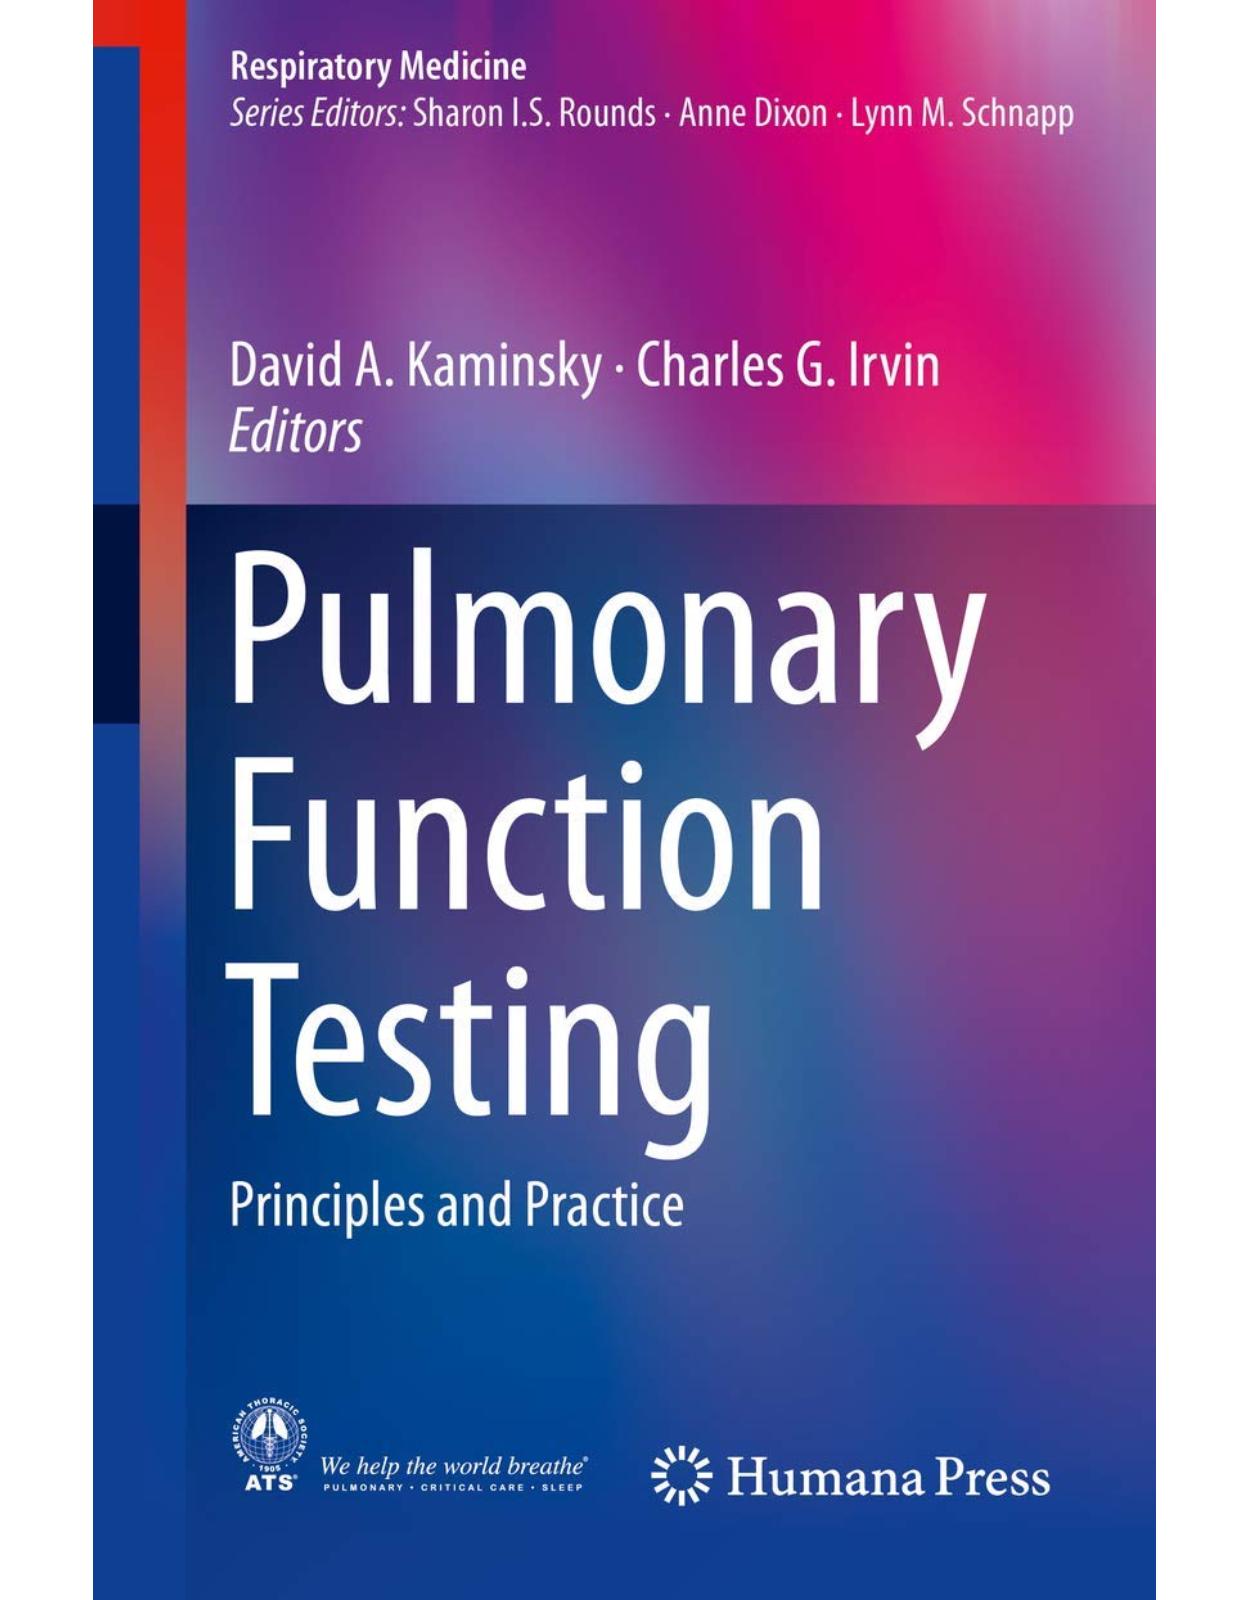 Pulmonary Function Testing: Principles and Practice (Respiratory Medicine) 